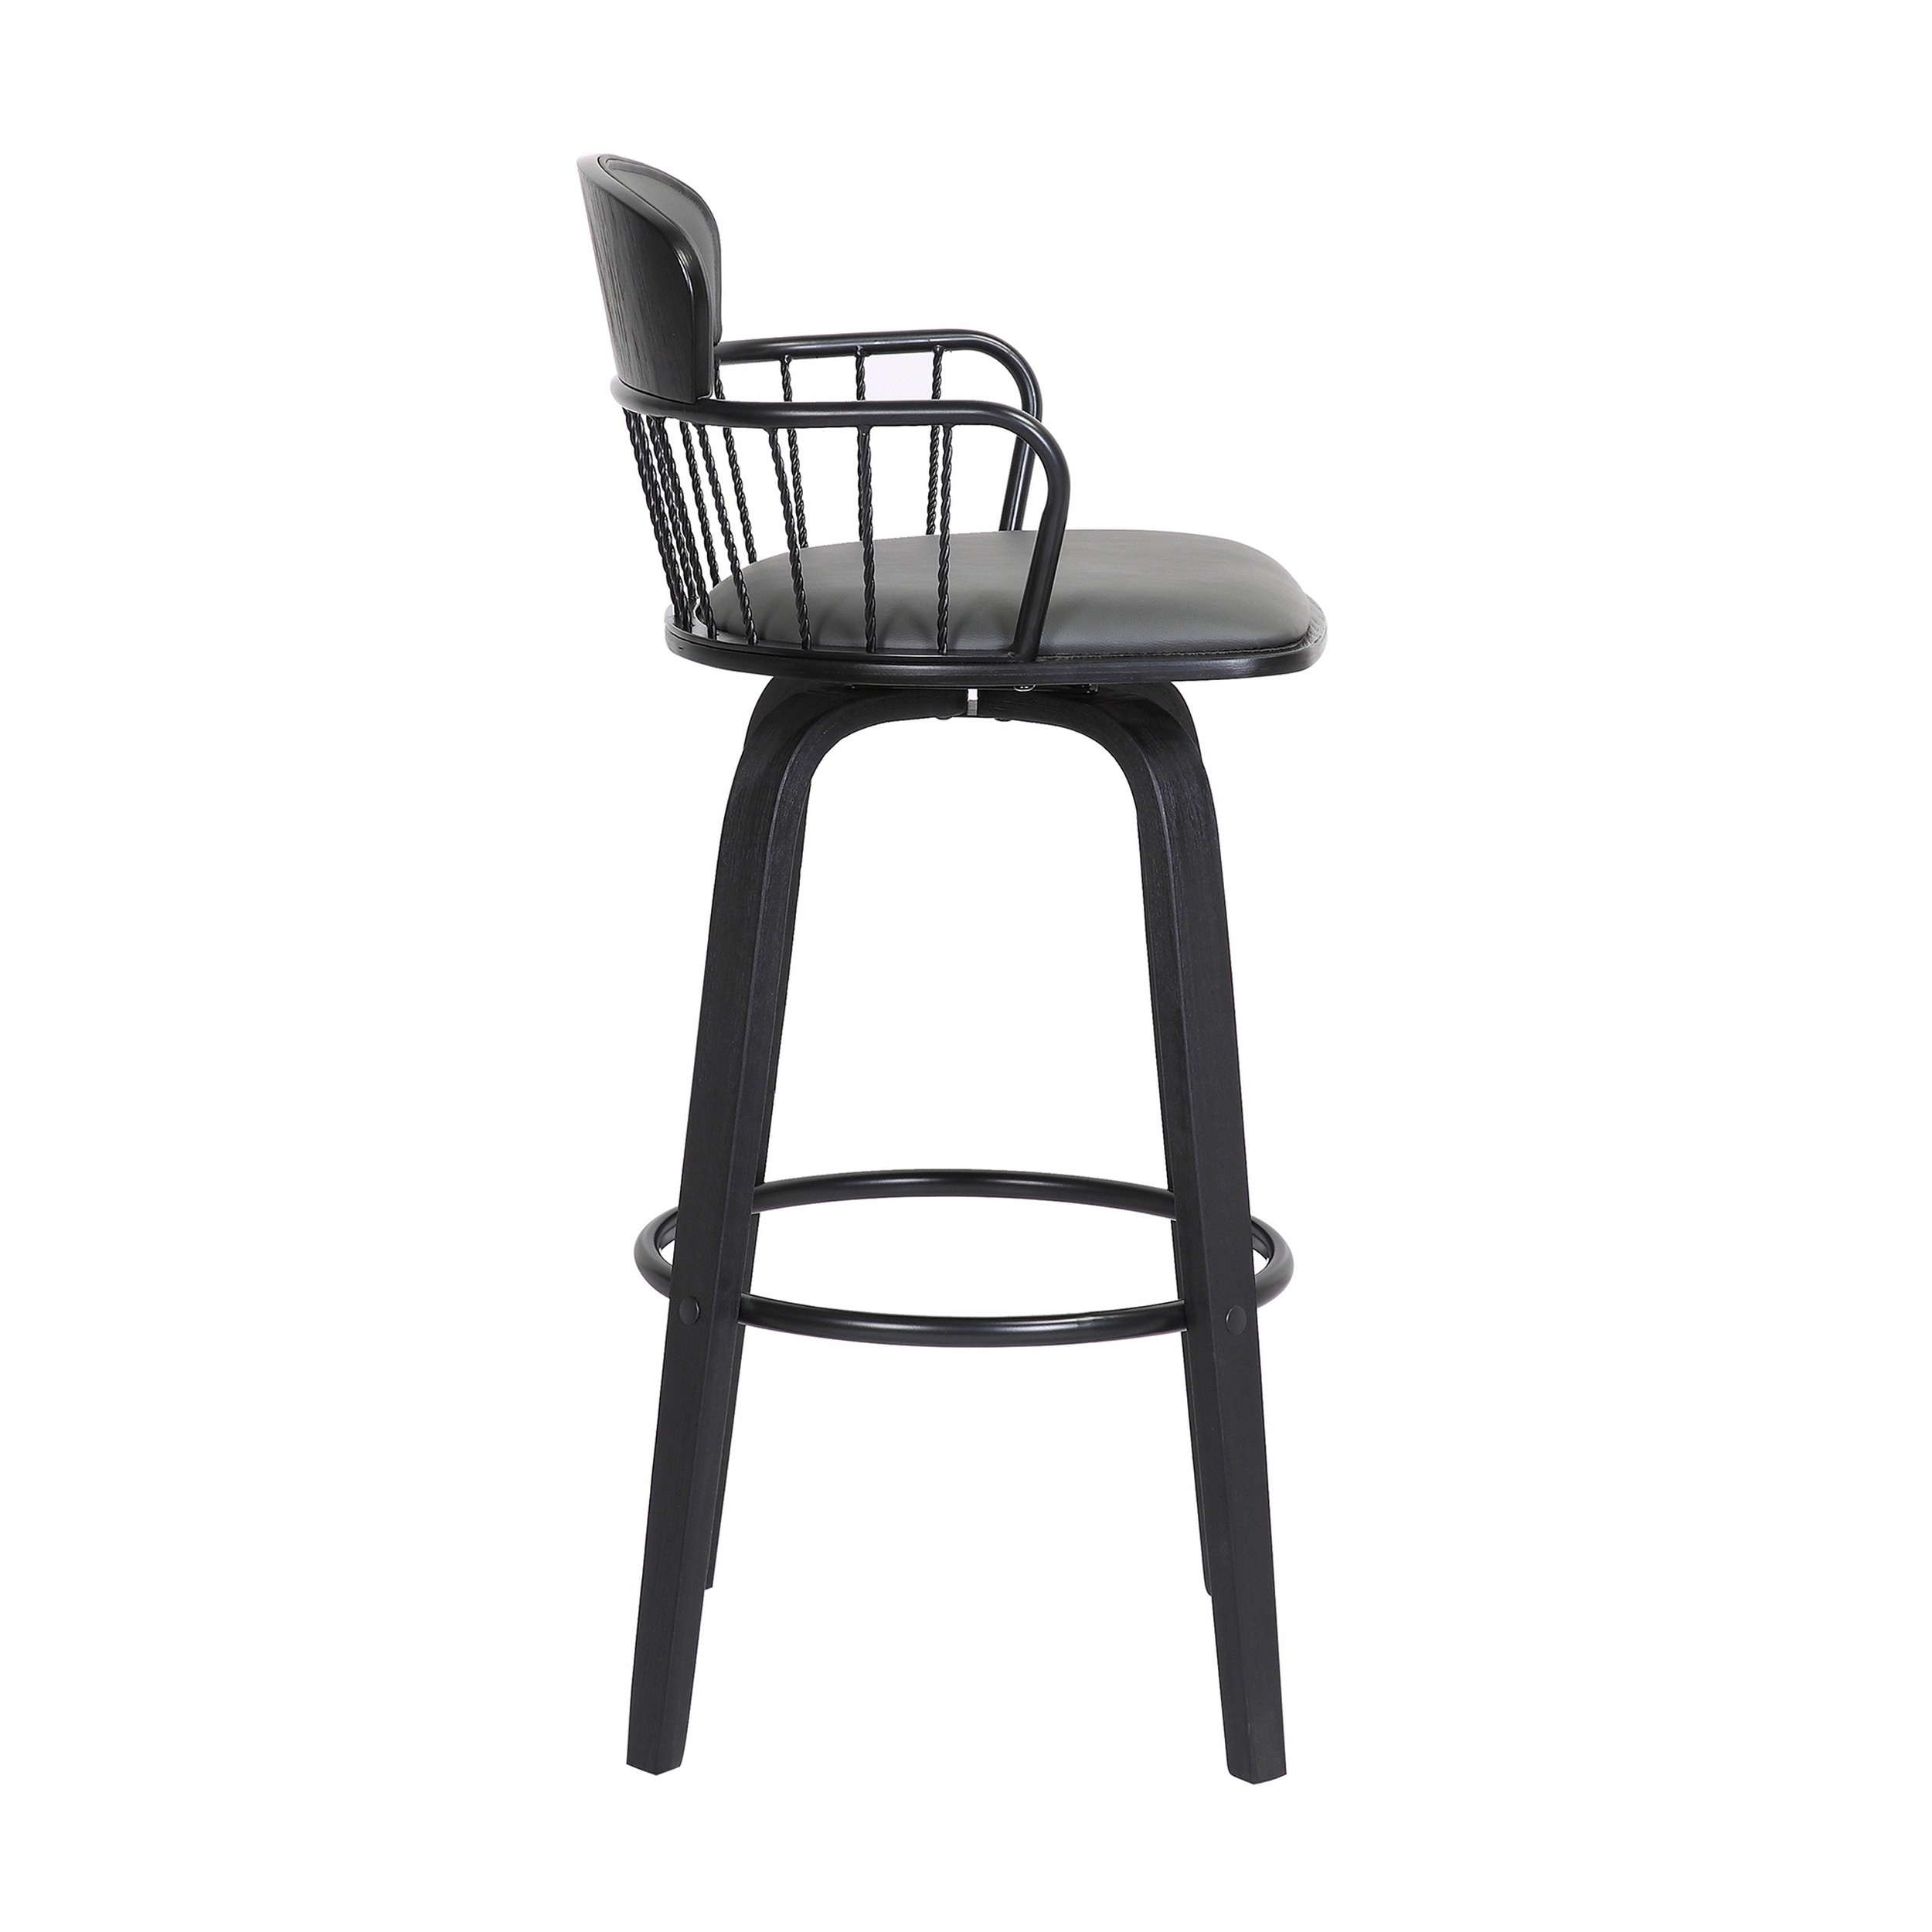 Wiz 26 Inch Counter Stool Chair, Slatted, Gray Faux Leather, Black Wood - Saltoro Sherpi